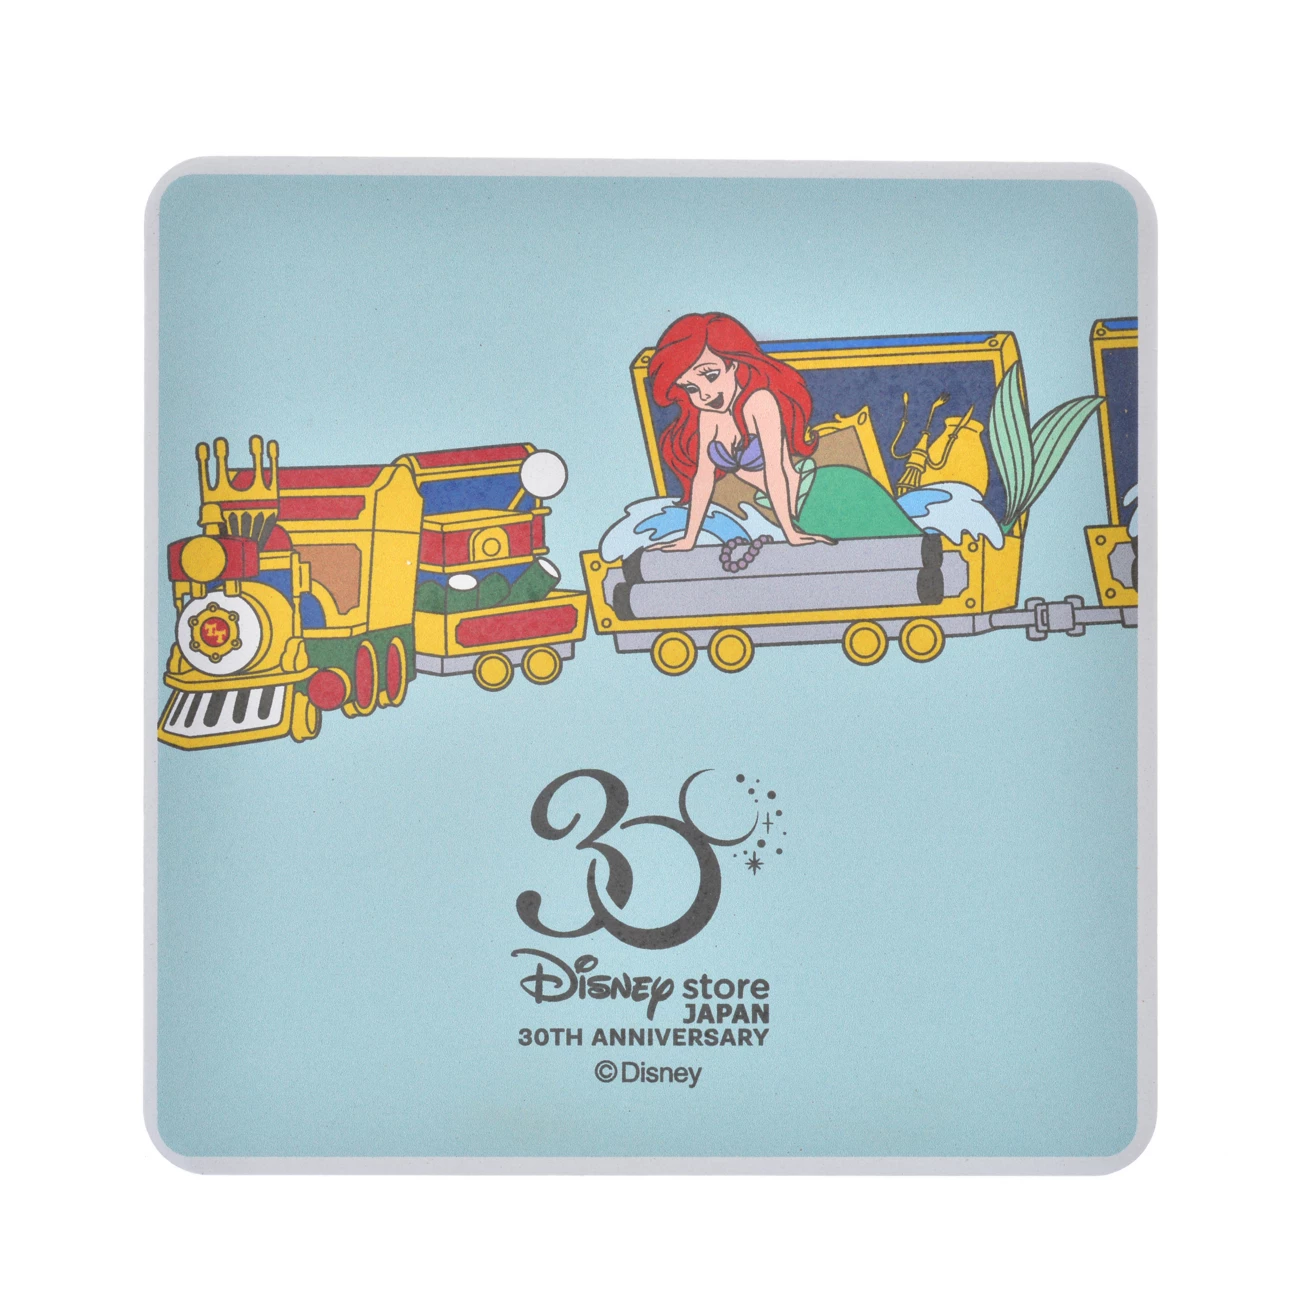 SDJ - Disney Store Japan 30TH Anniversary - Coaster